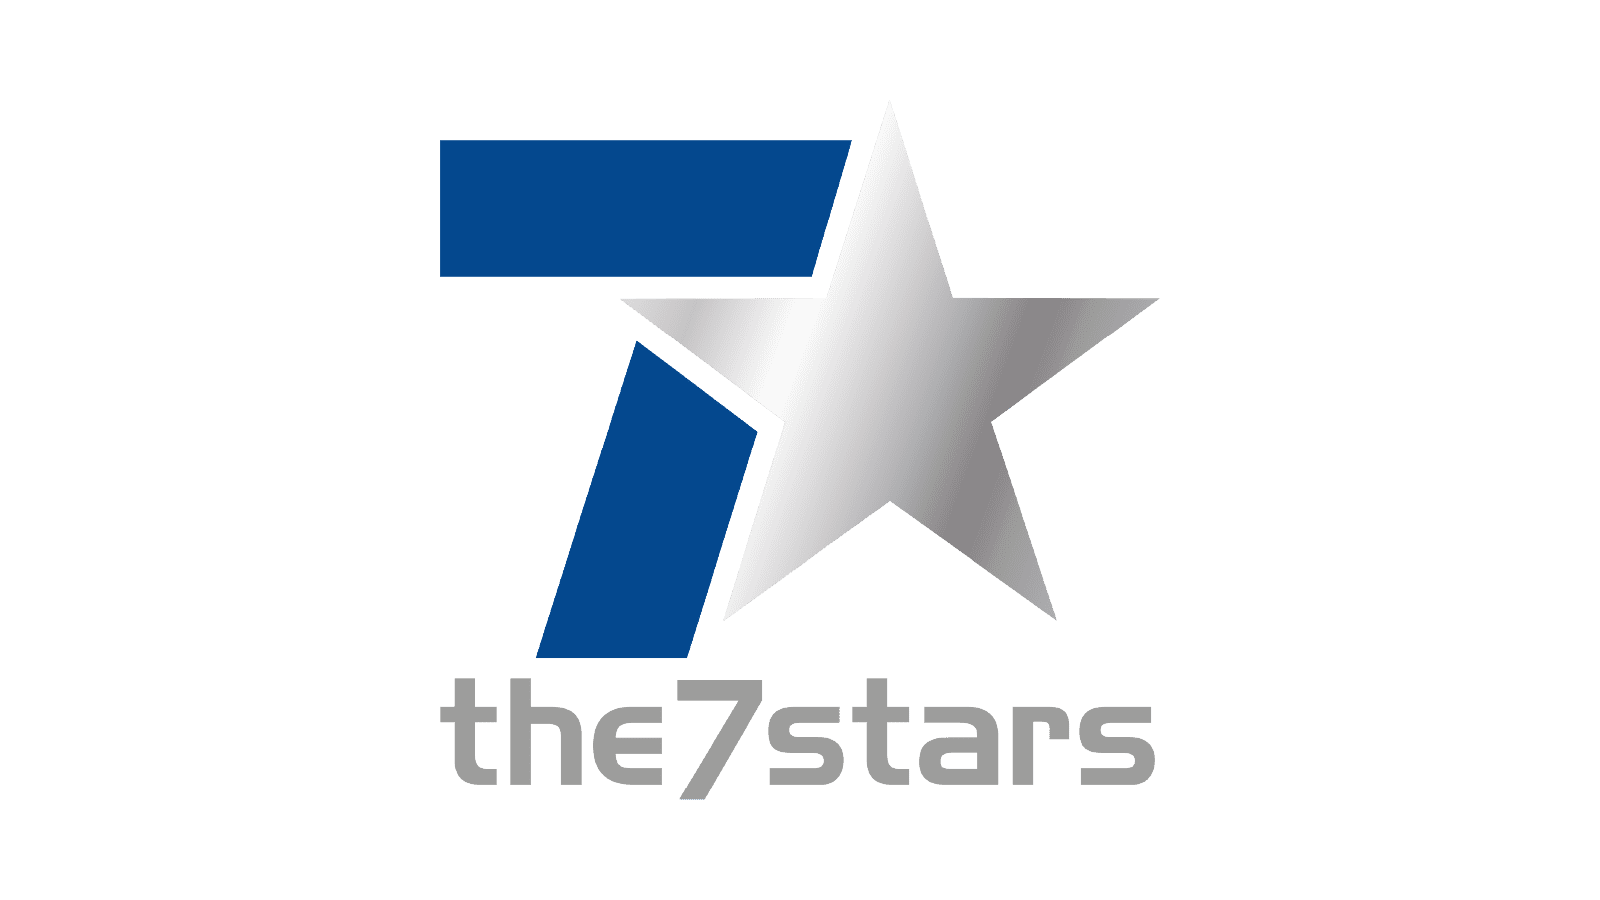 The 7 stars logo